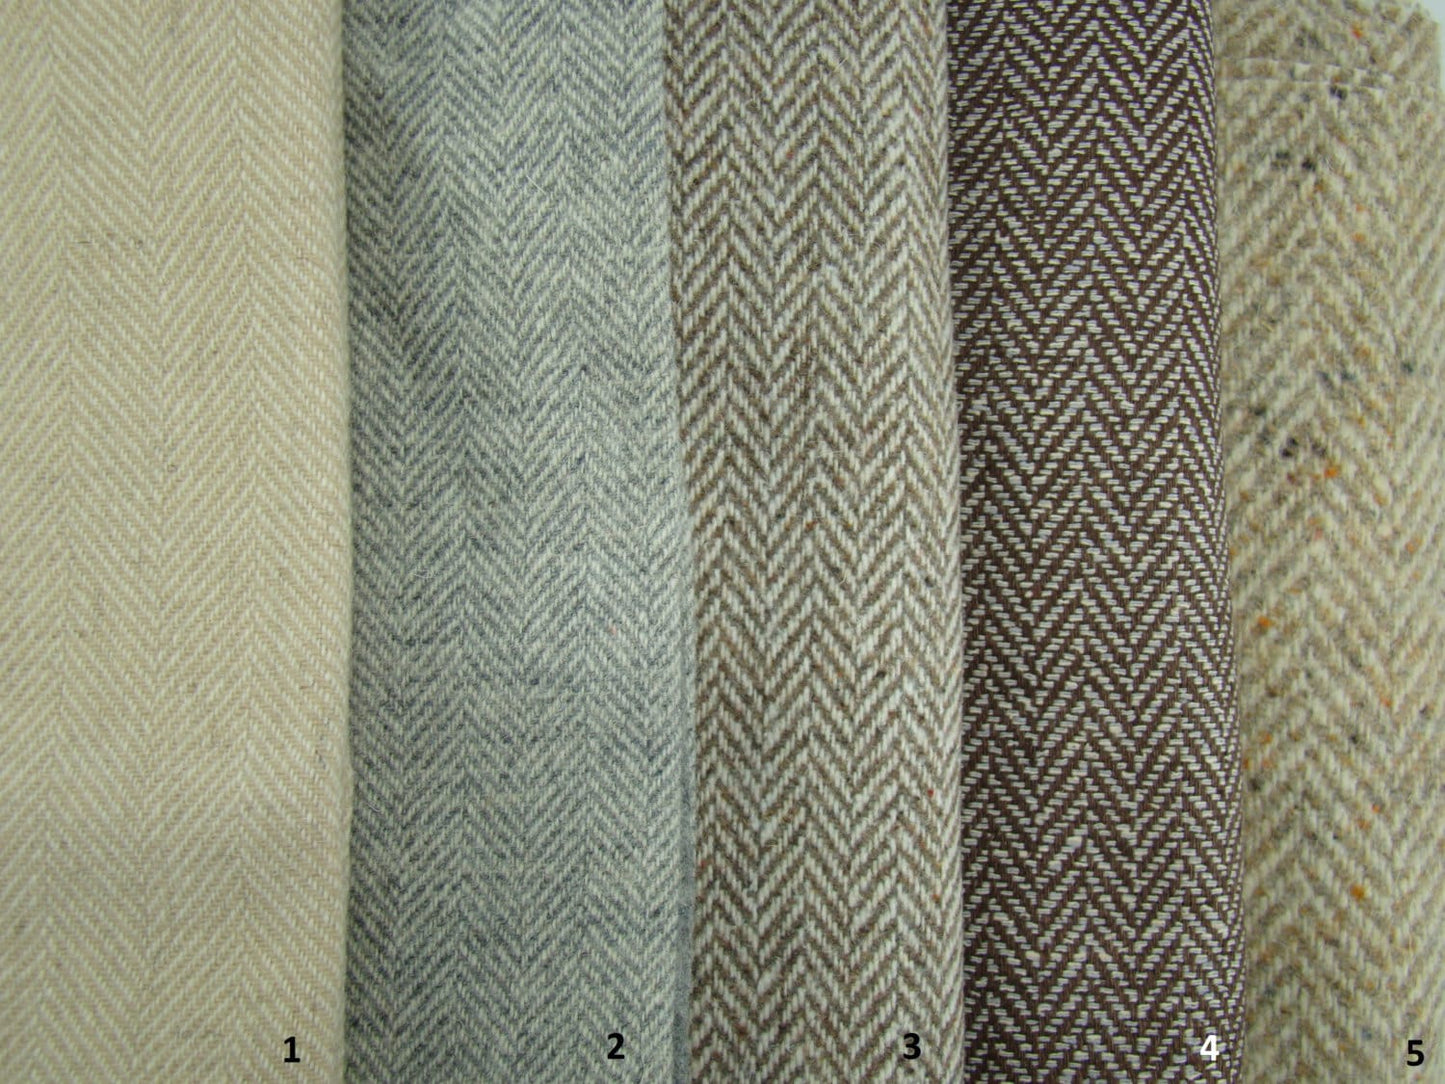 Custom Handmade  Wool Herringbone Tweed Jeff Cap in Tan, Brown, Grey for Boys, Baby, Infant, Toddler Newsboy Ivy Driving Golf Cap